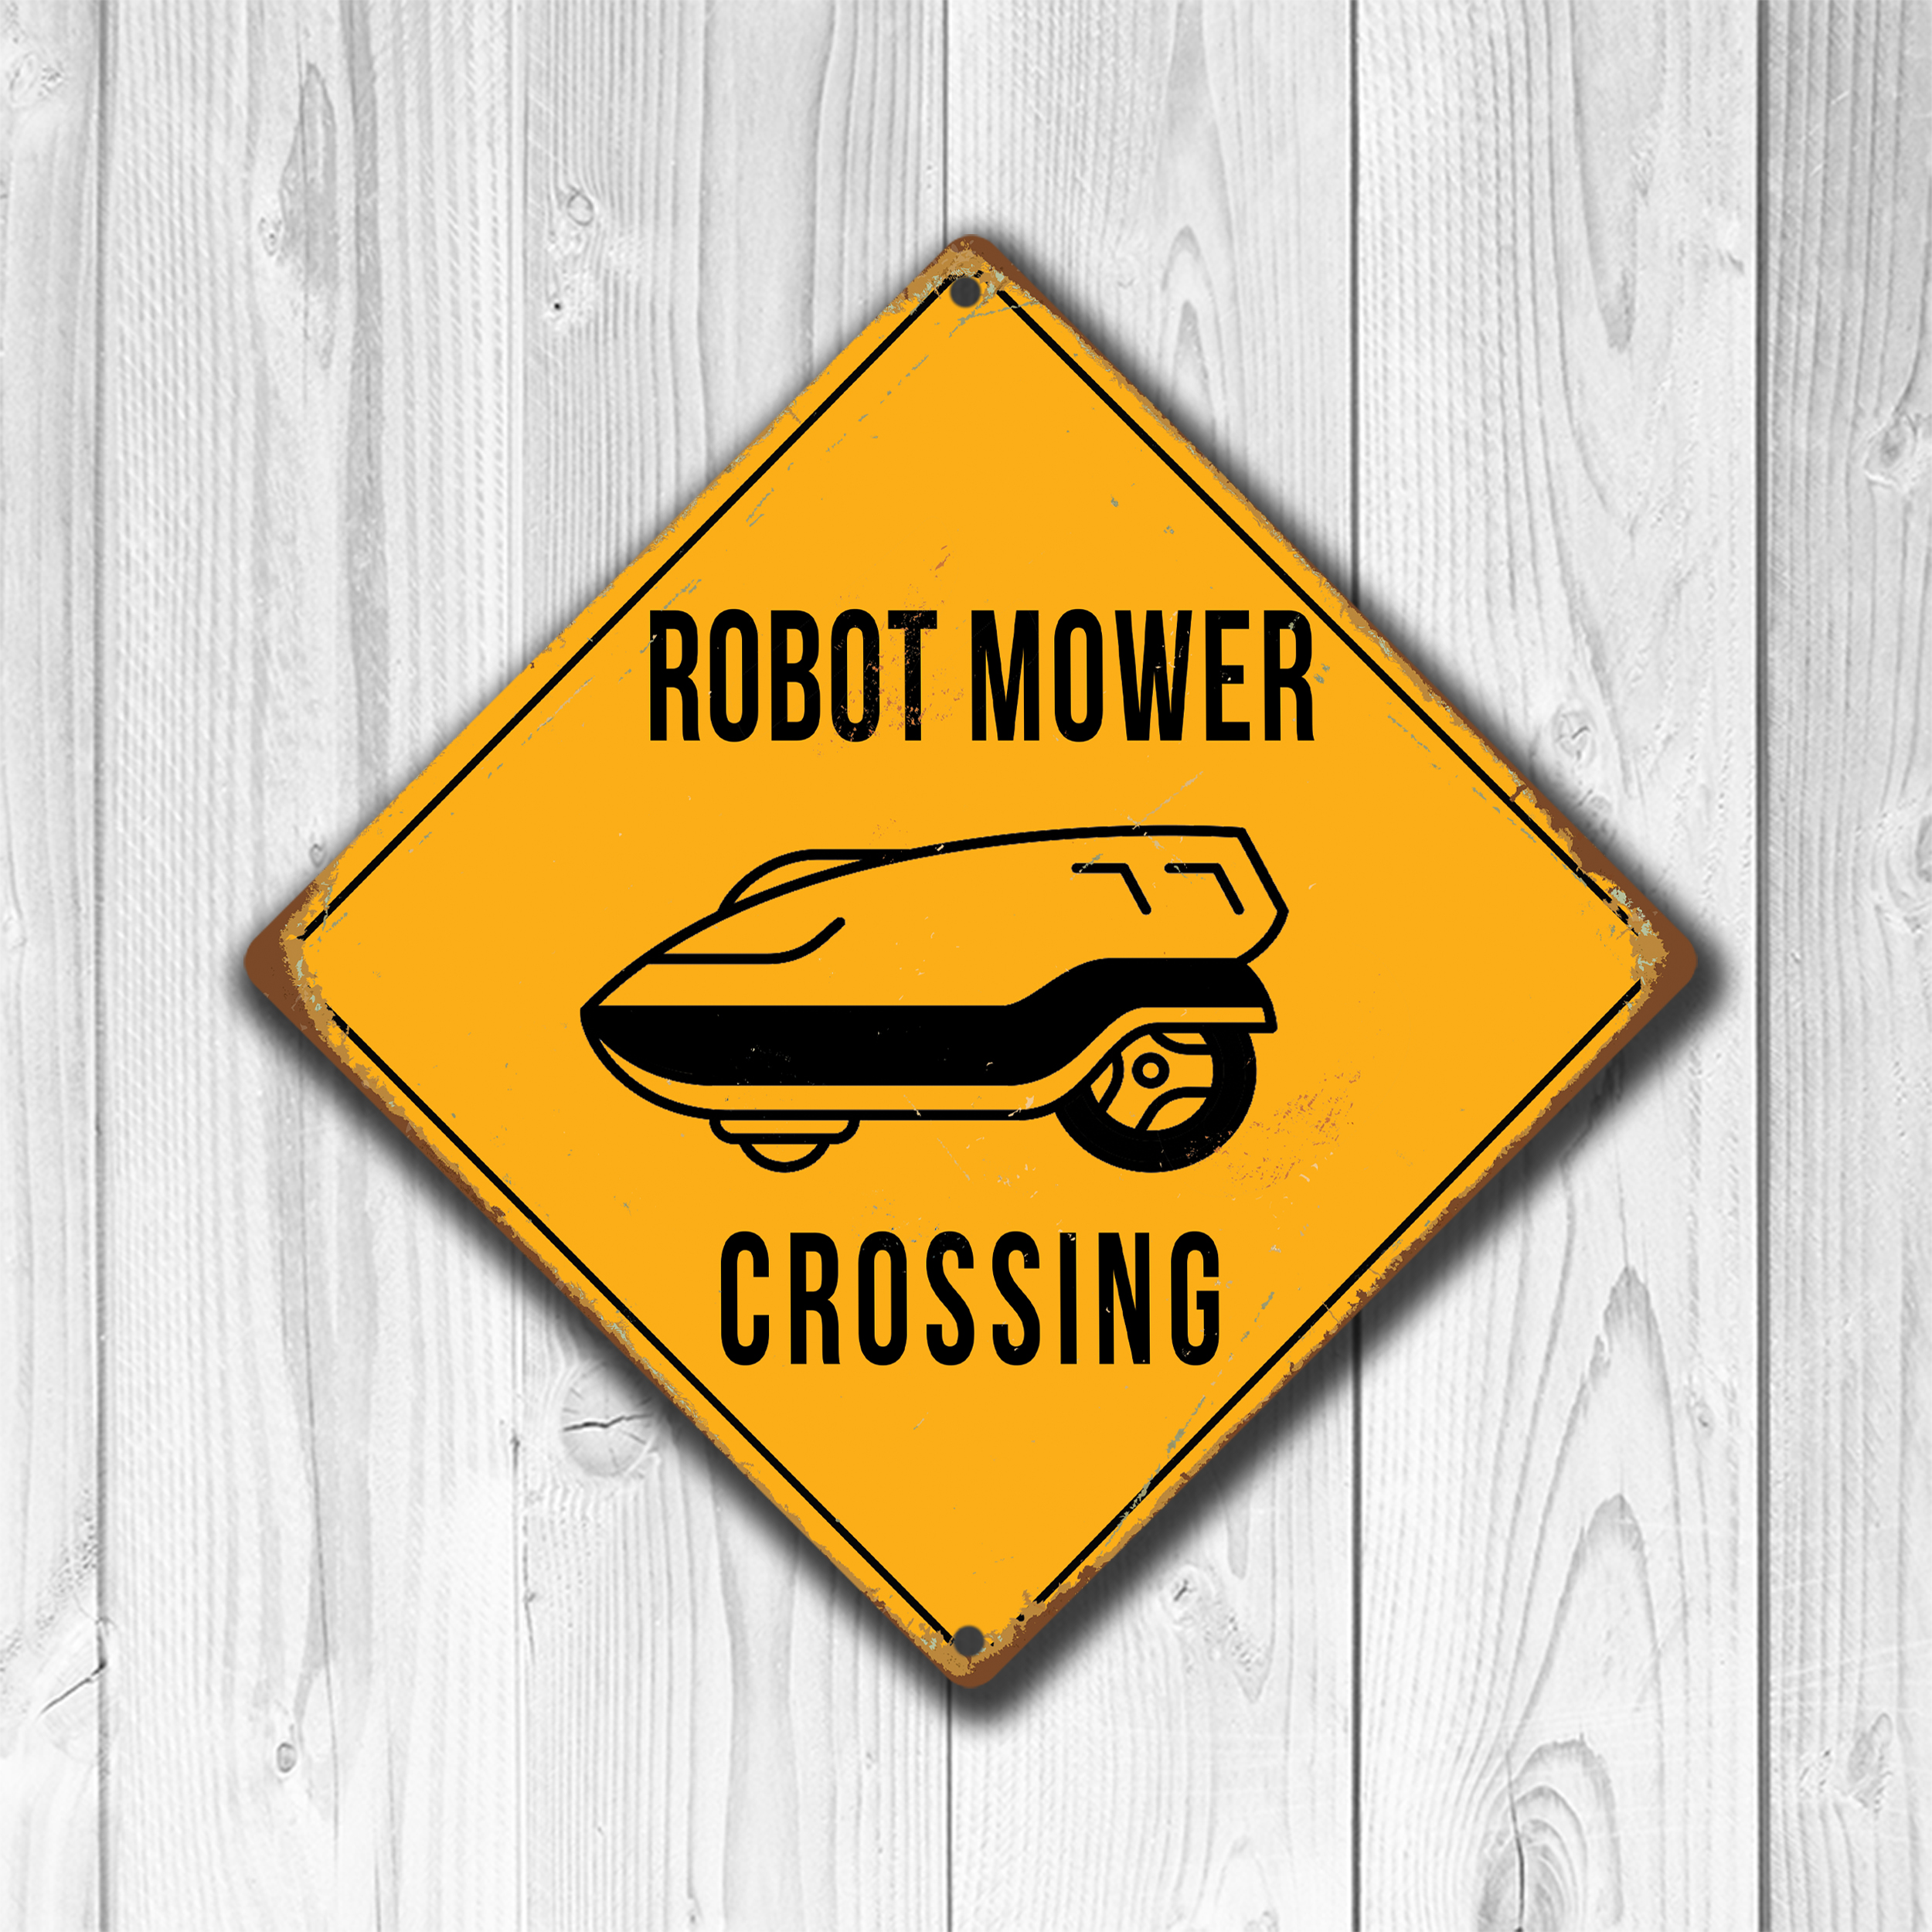 Robot Mower Xing Signs